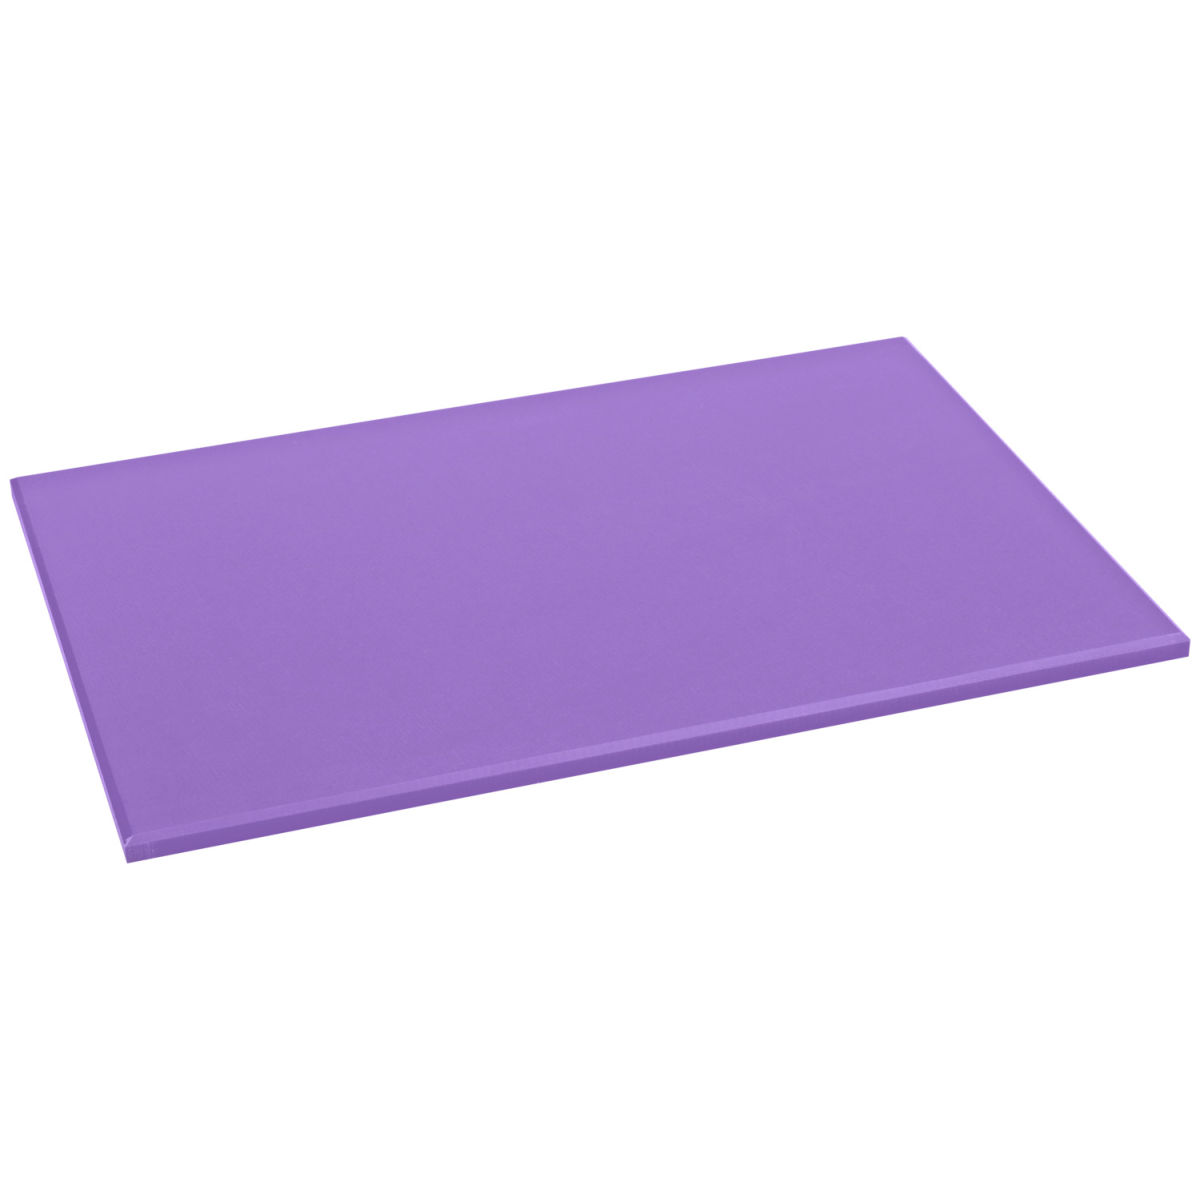 PULSIVA Snijplank Clever OSF 20x30 cm; 30x20x1.2 cm (LxBxH); violet